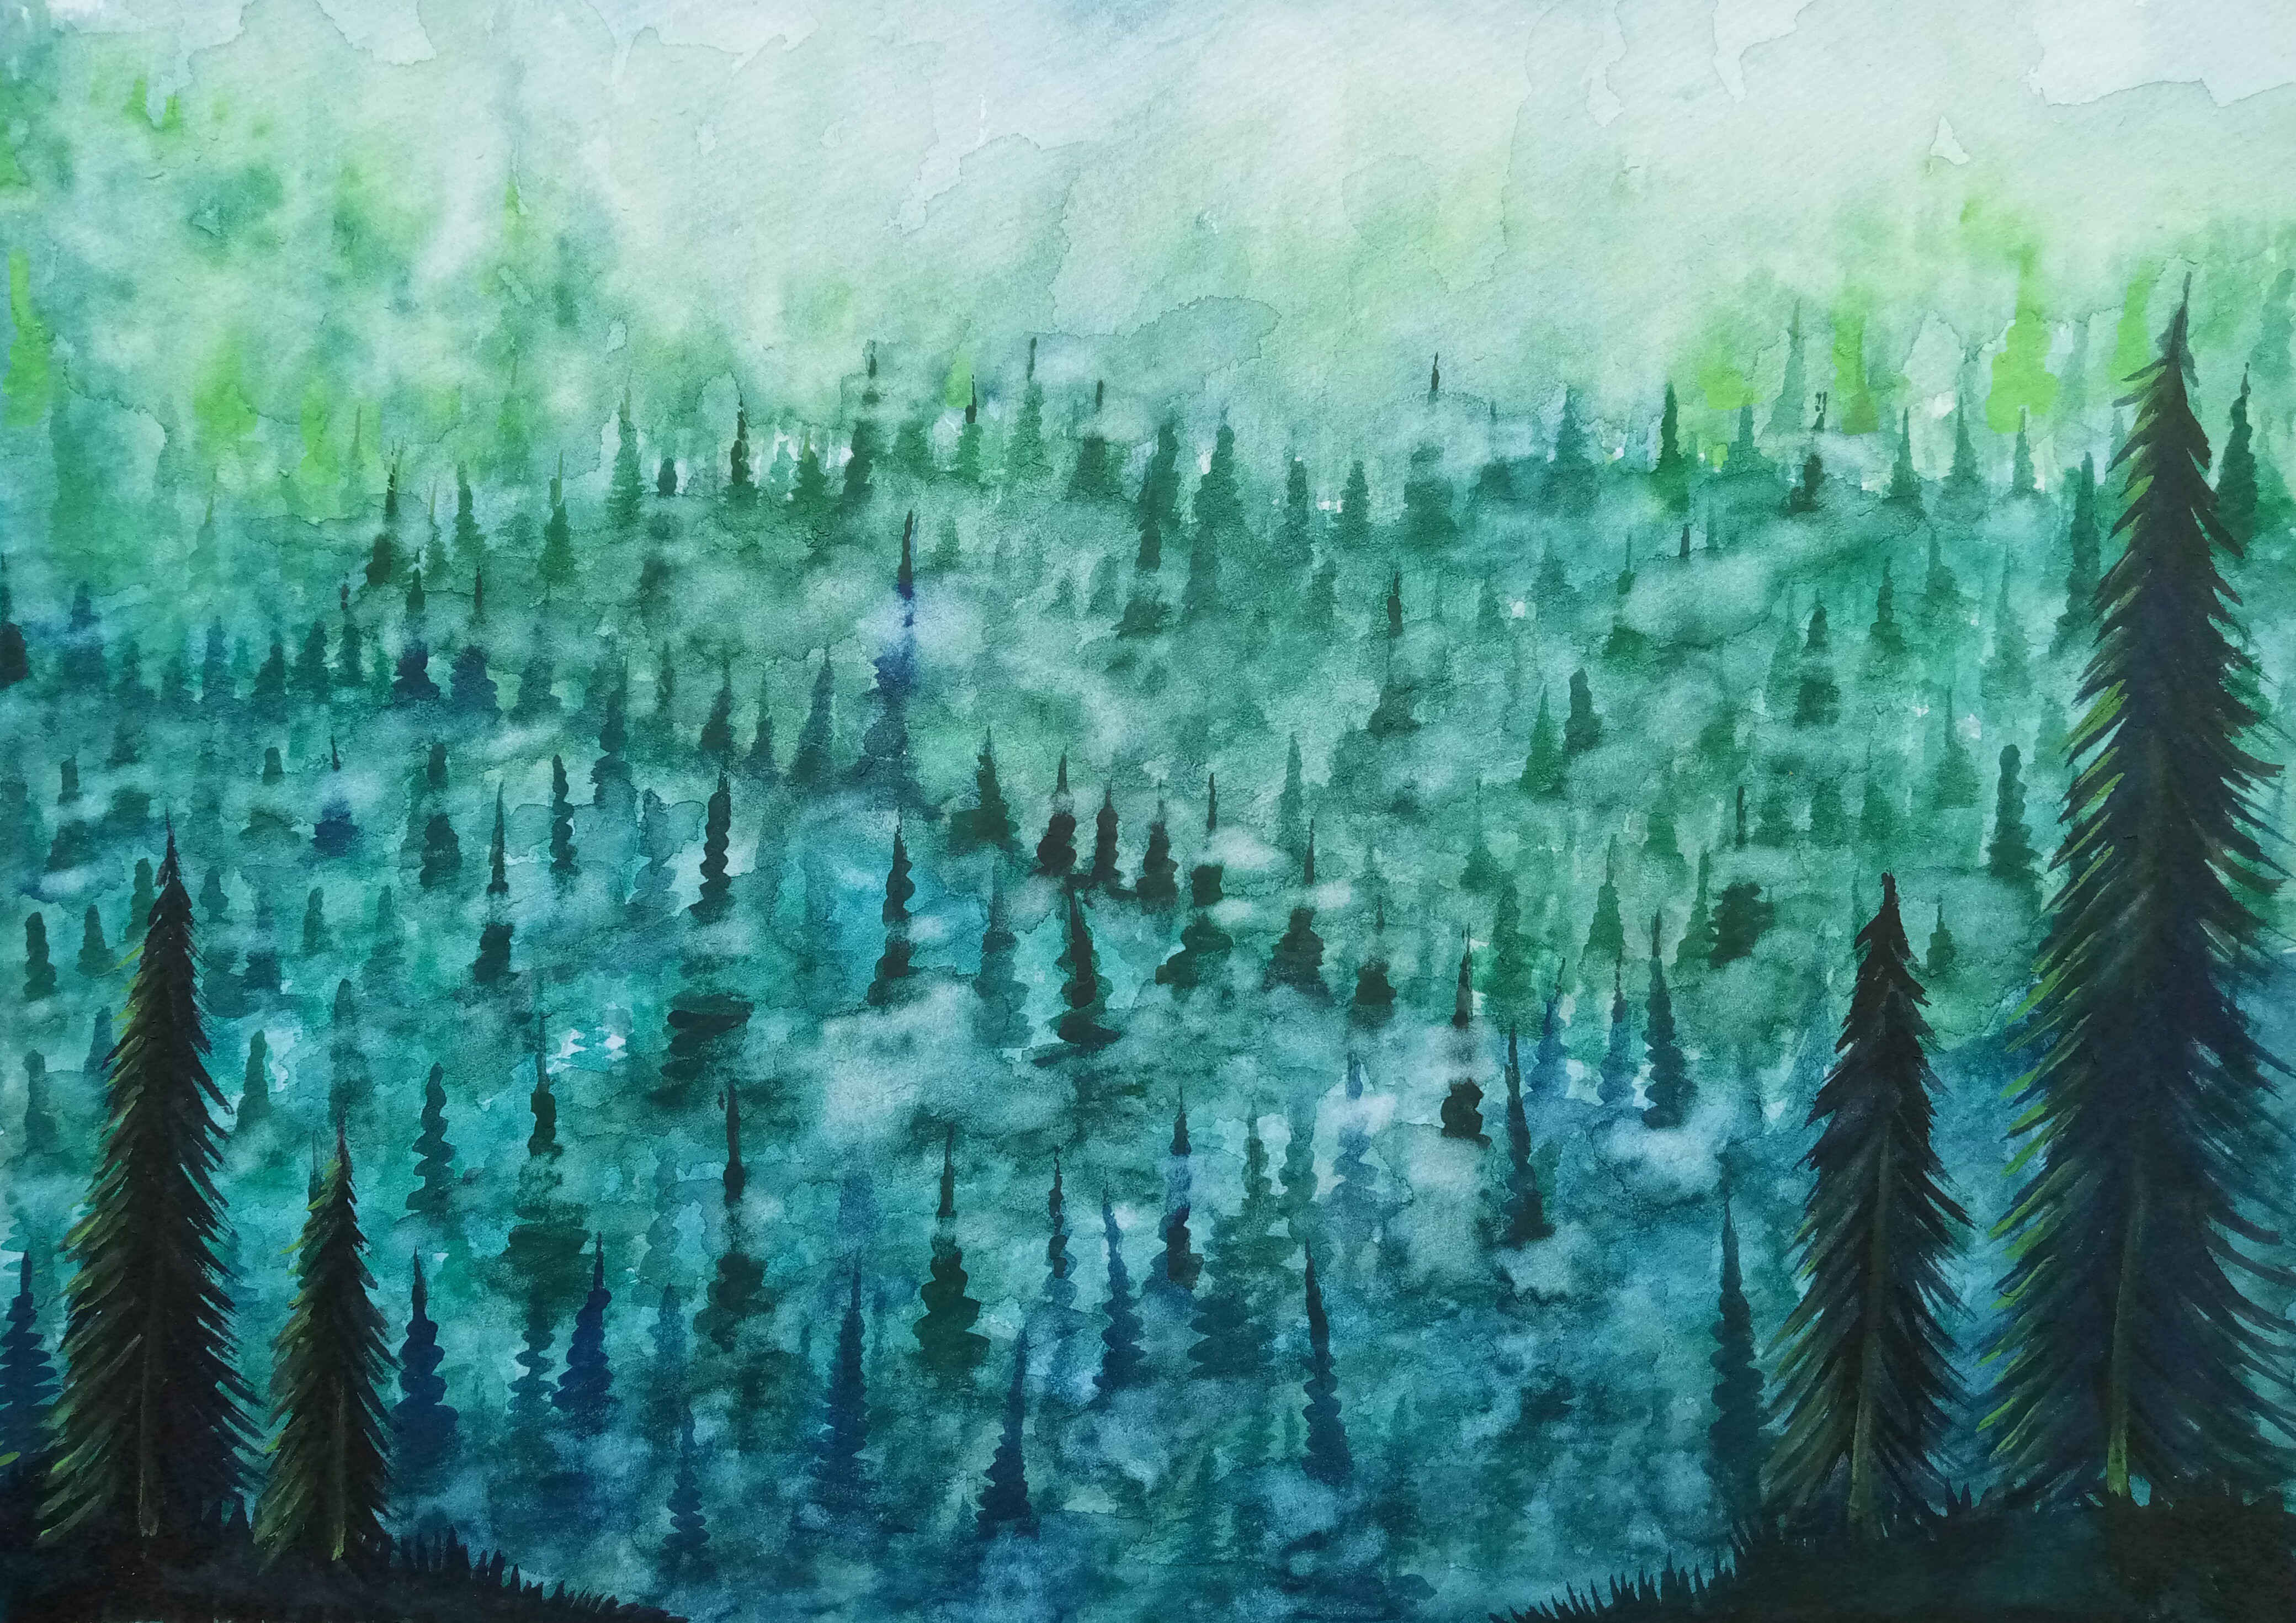 The Misty Forest by Amaya Ranatunge